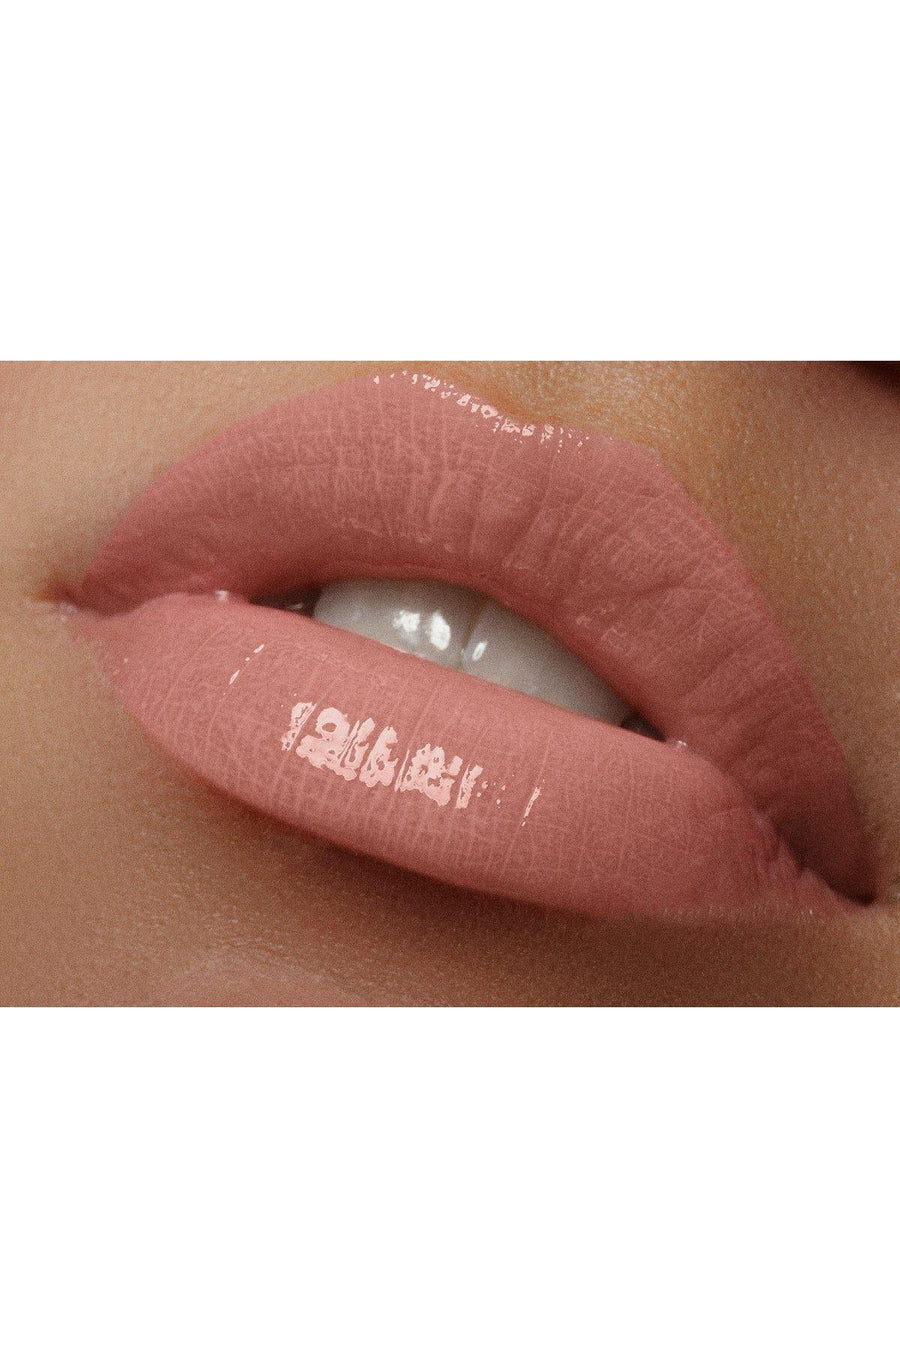 Lip Gloss#G12 - Rosy Future - Blend Mineral Cosmetics